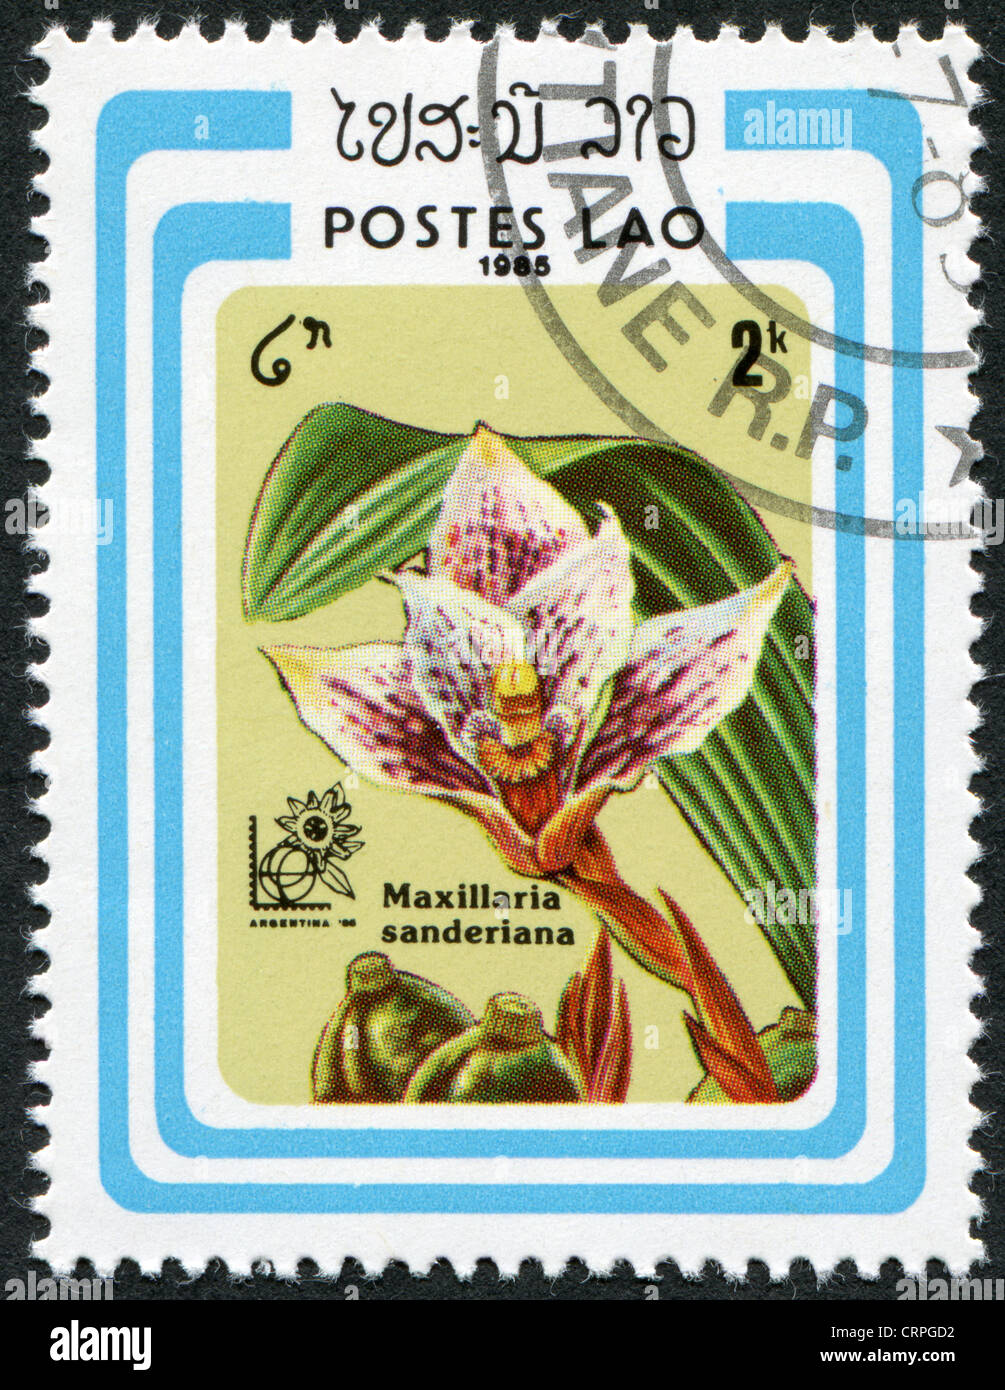 LAOS-CIRCA 1985: A stamp printed in the Laos, depicts a flower Maxillaria sanderiana, circa 1985 Stock Photo